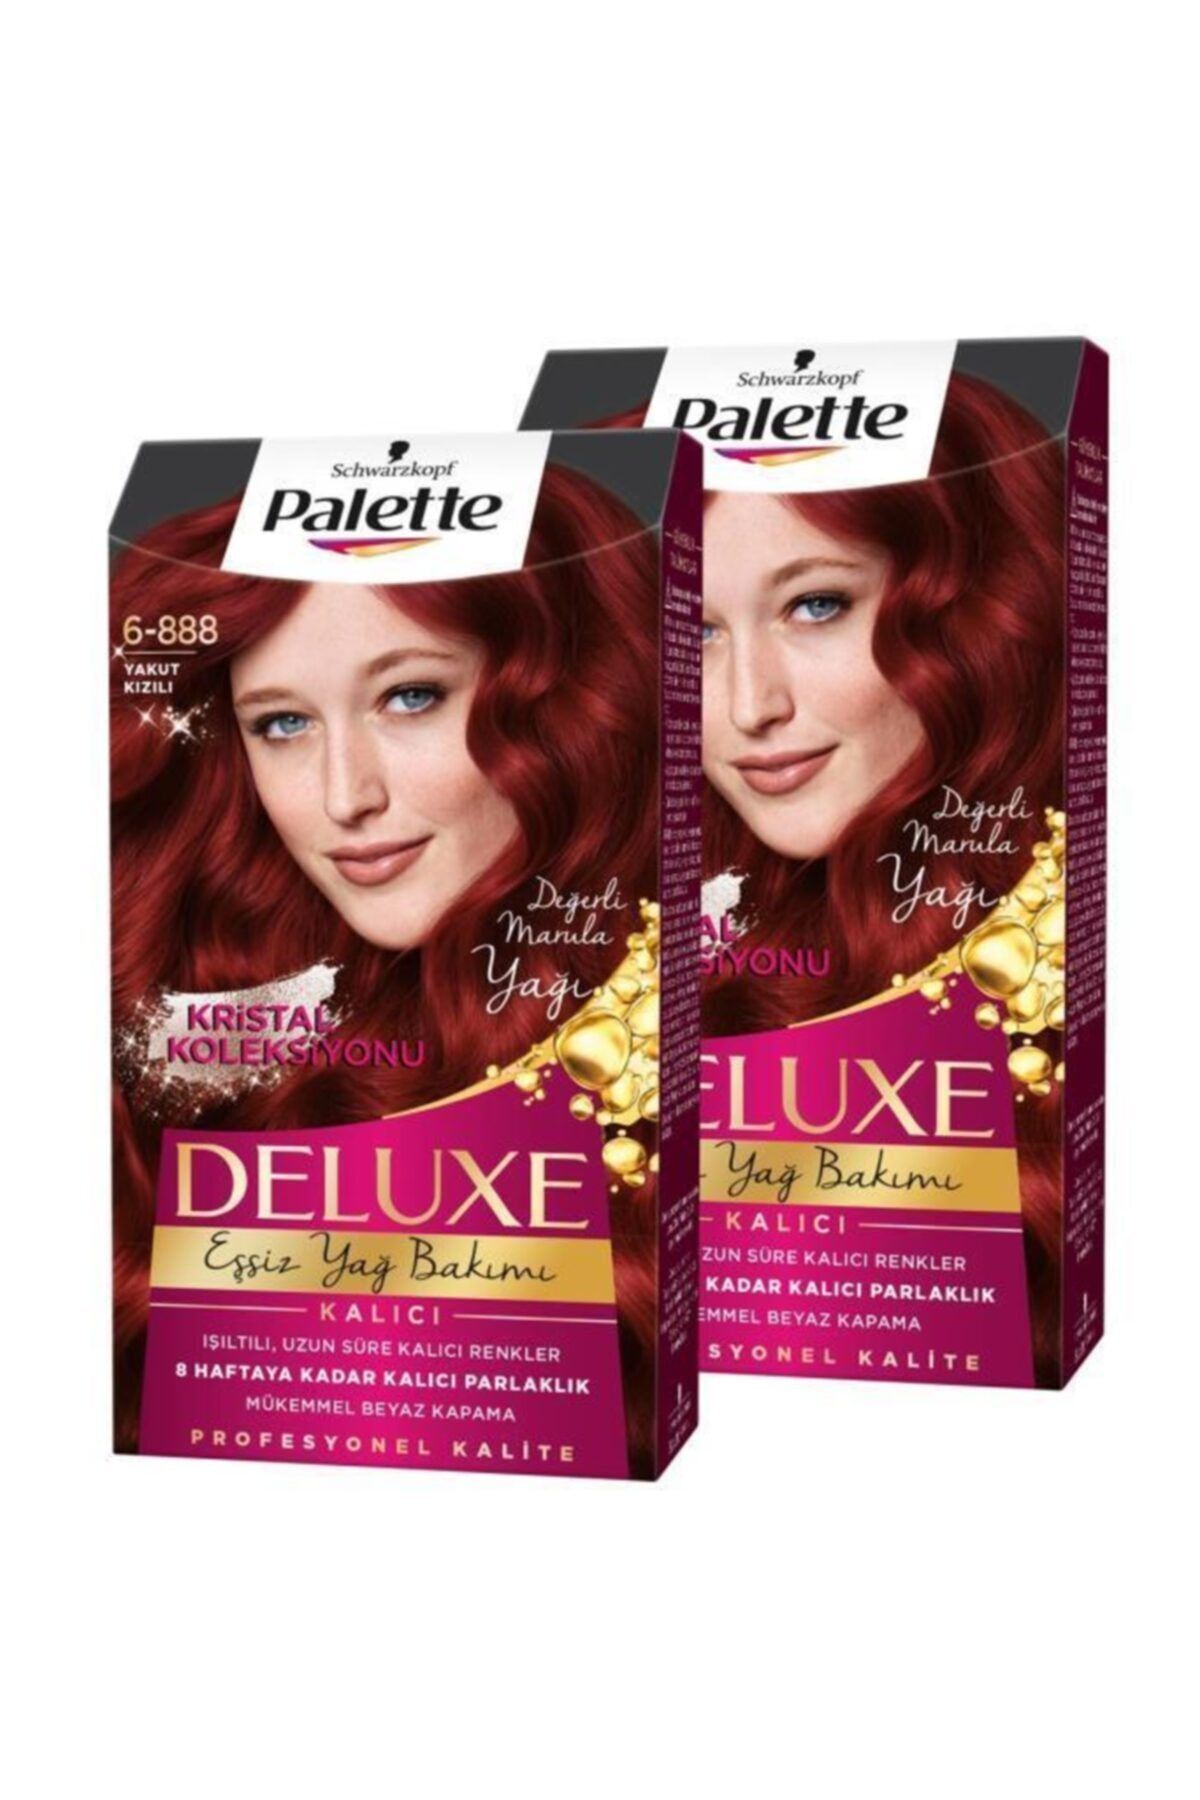 Palette Deluxe 6-888 Yakut Kızılı X 2 Adet